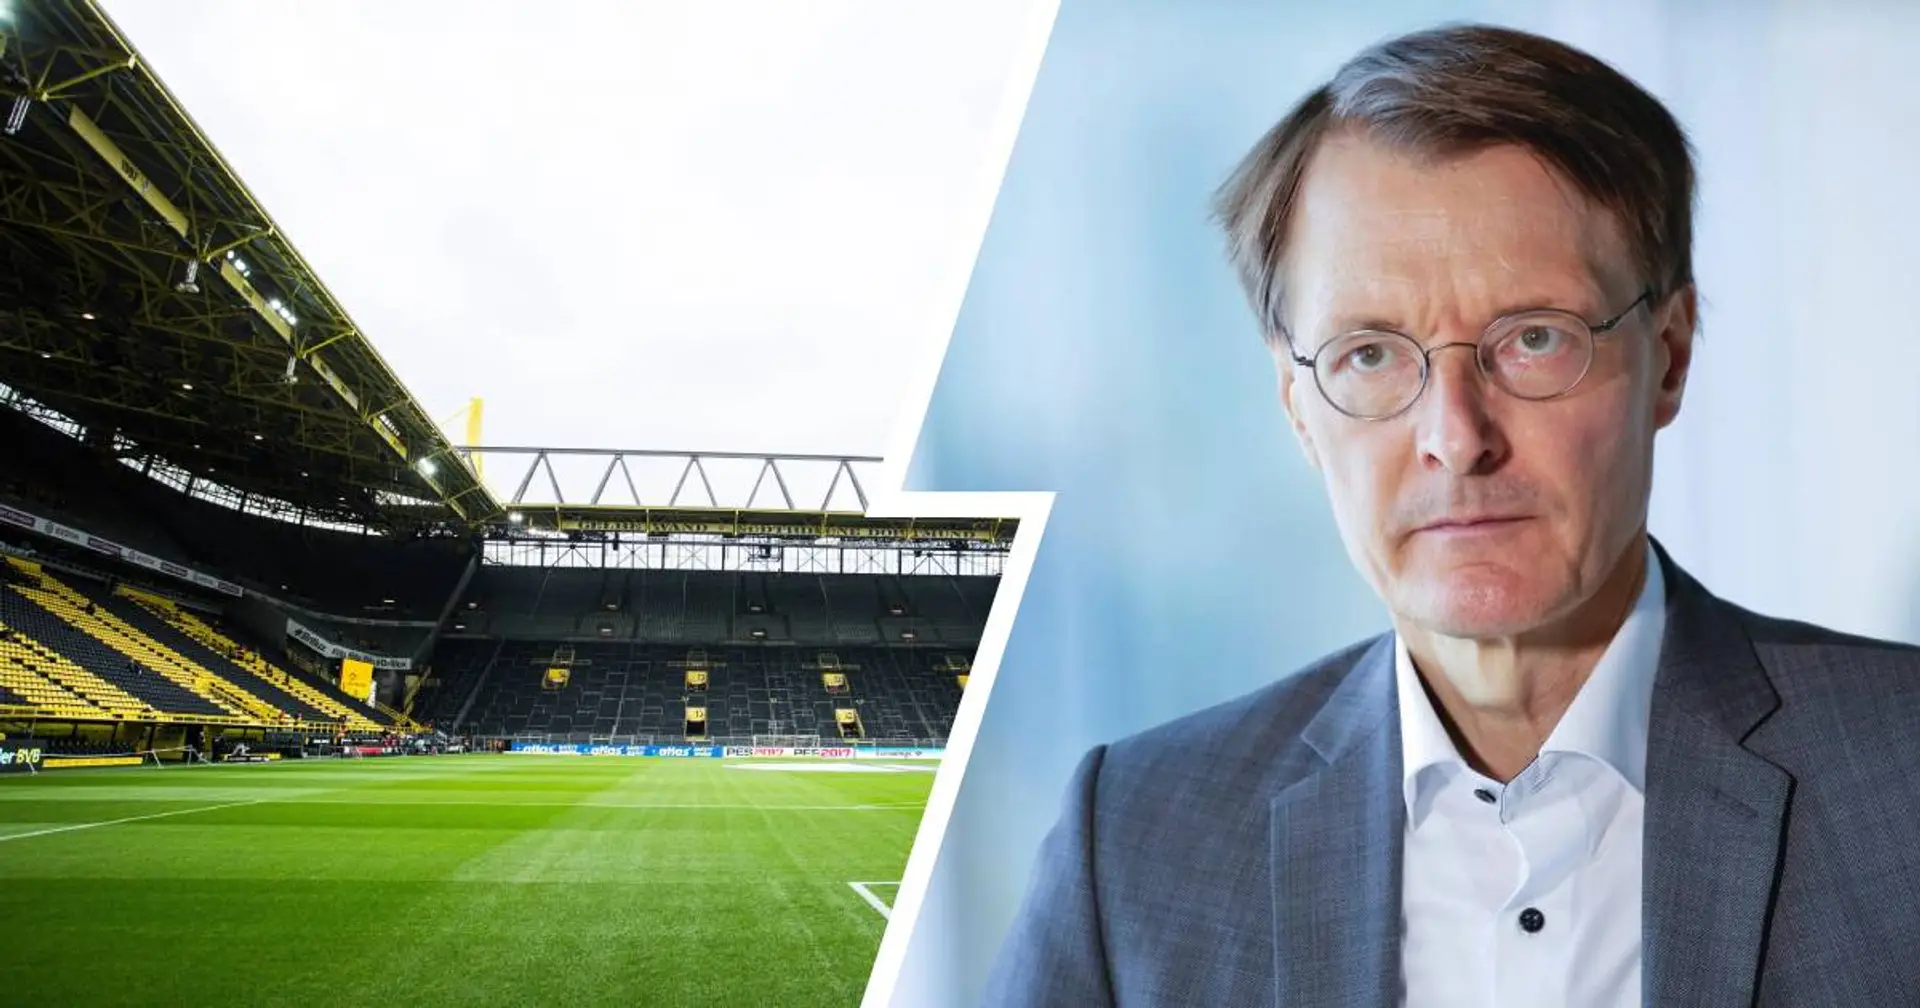 Gesundheitsexperte Lauterbach warnt vor dem neuen Bundesliga-Stopp wegen Corona